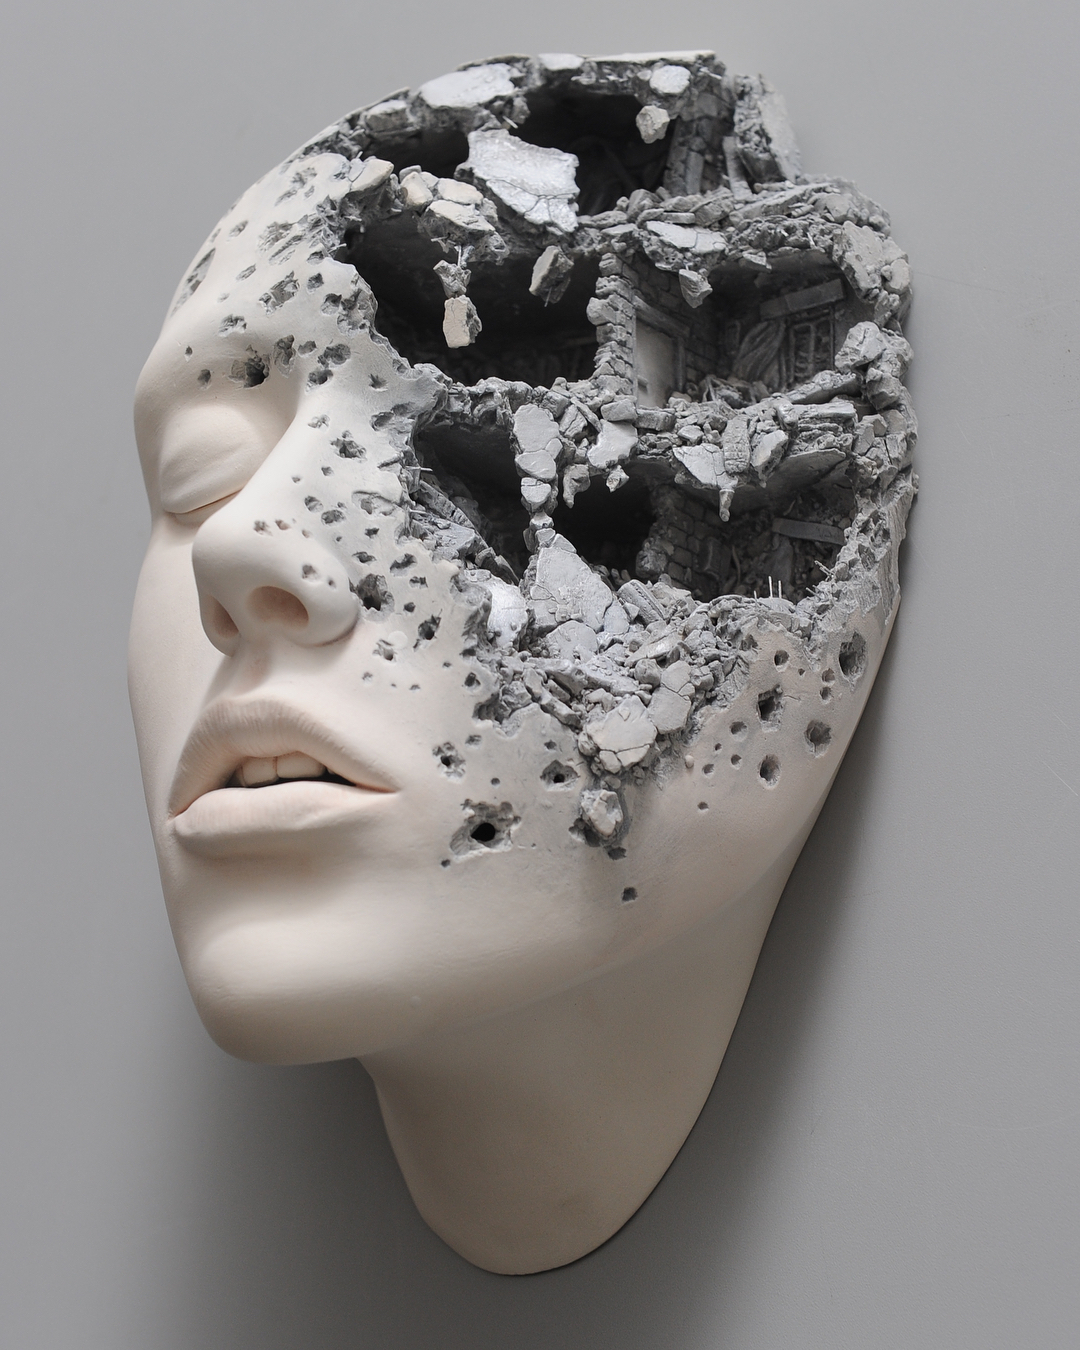 destroyed human face sculpture